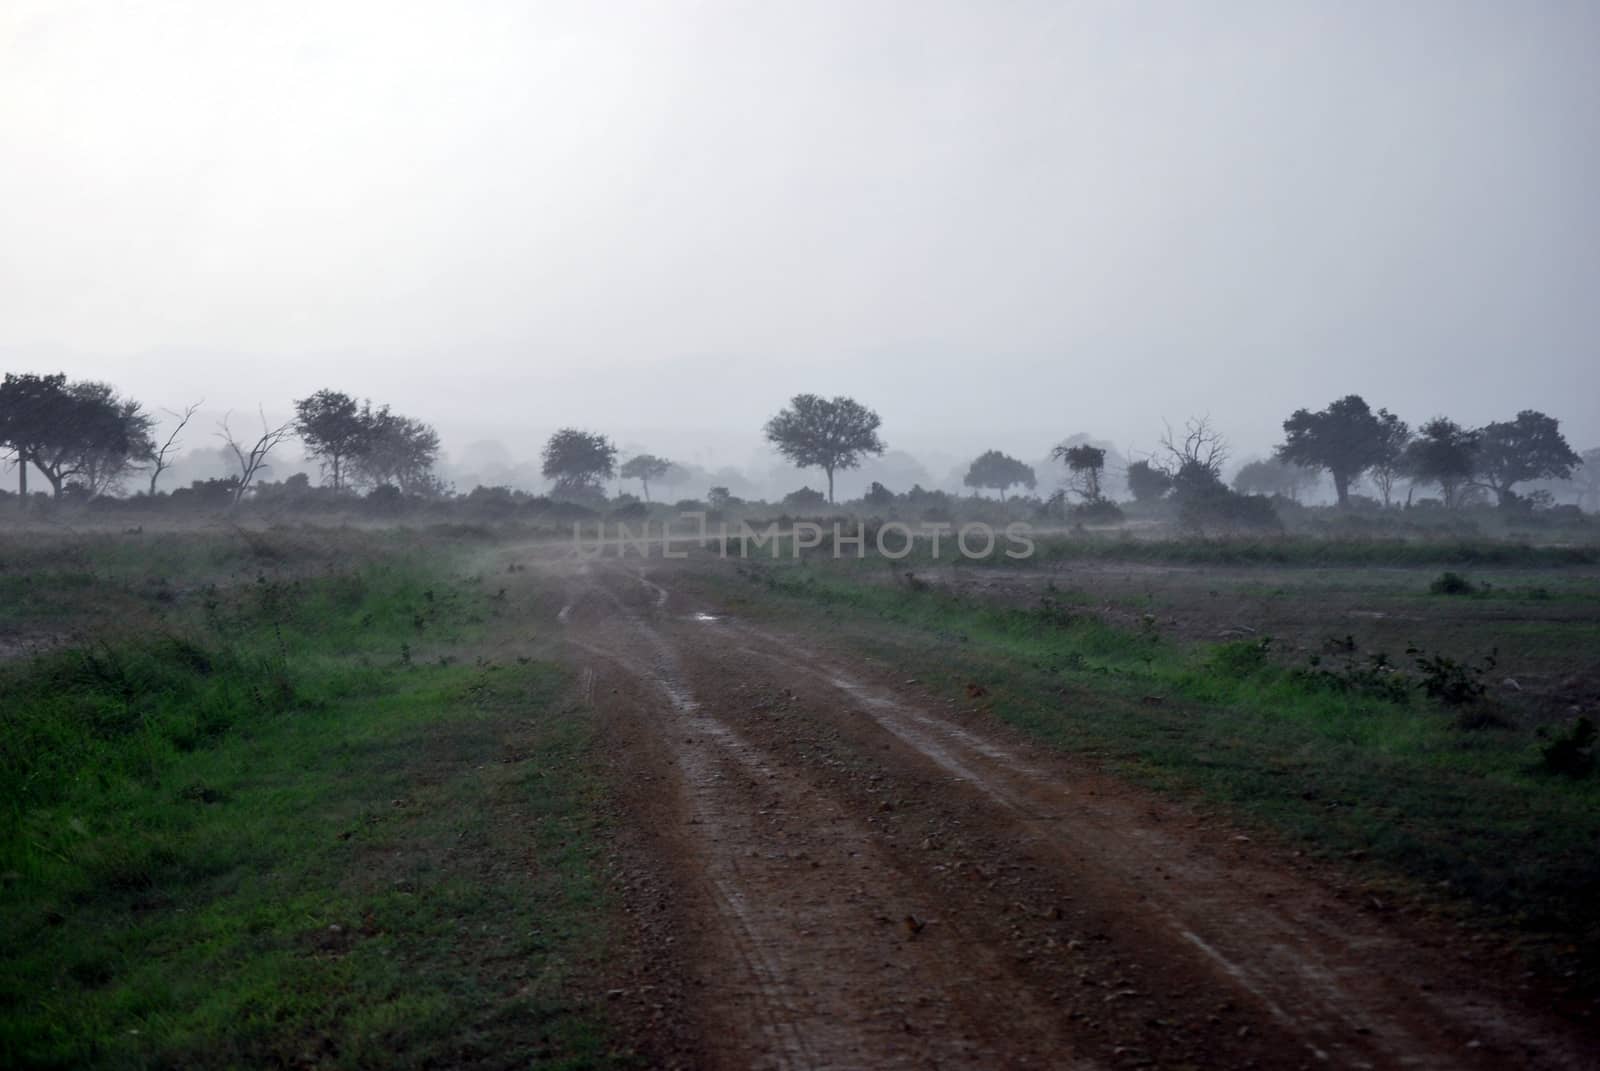 Mist after a thunderstorm on the savanna of a Tanzanian park